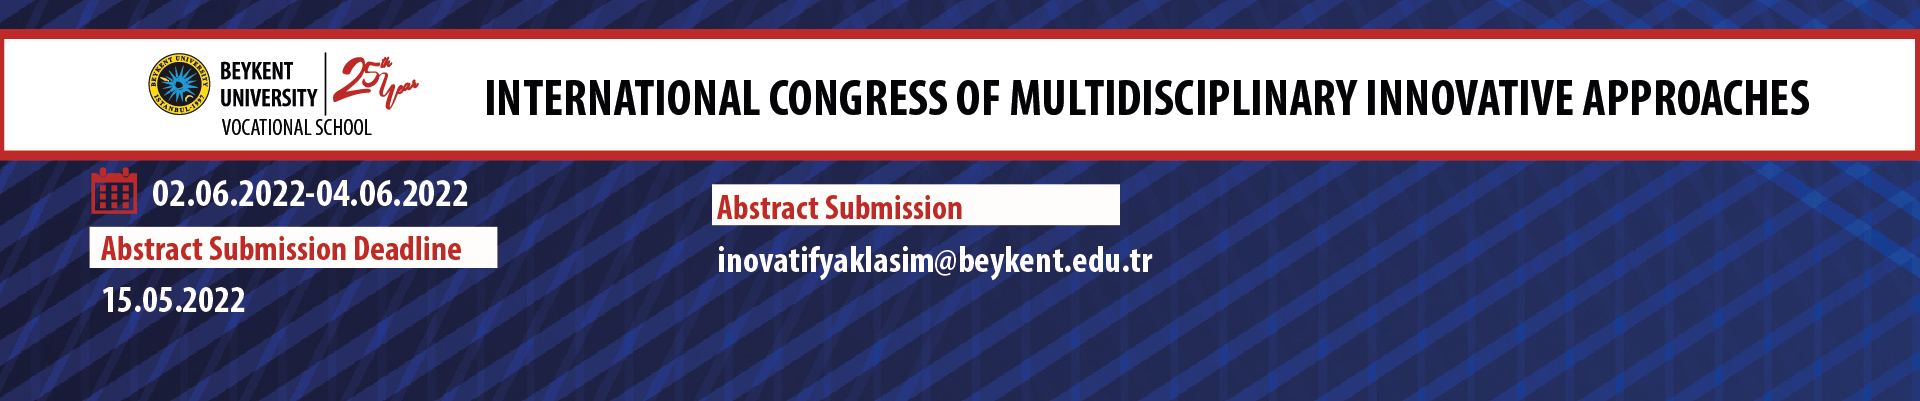 Congress of International Multidisciplinary Innovative Approaches